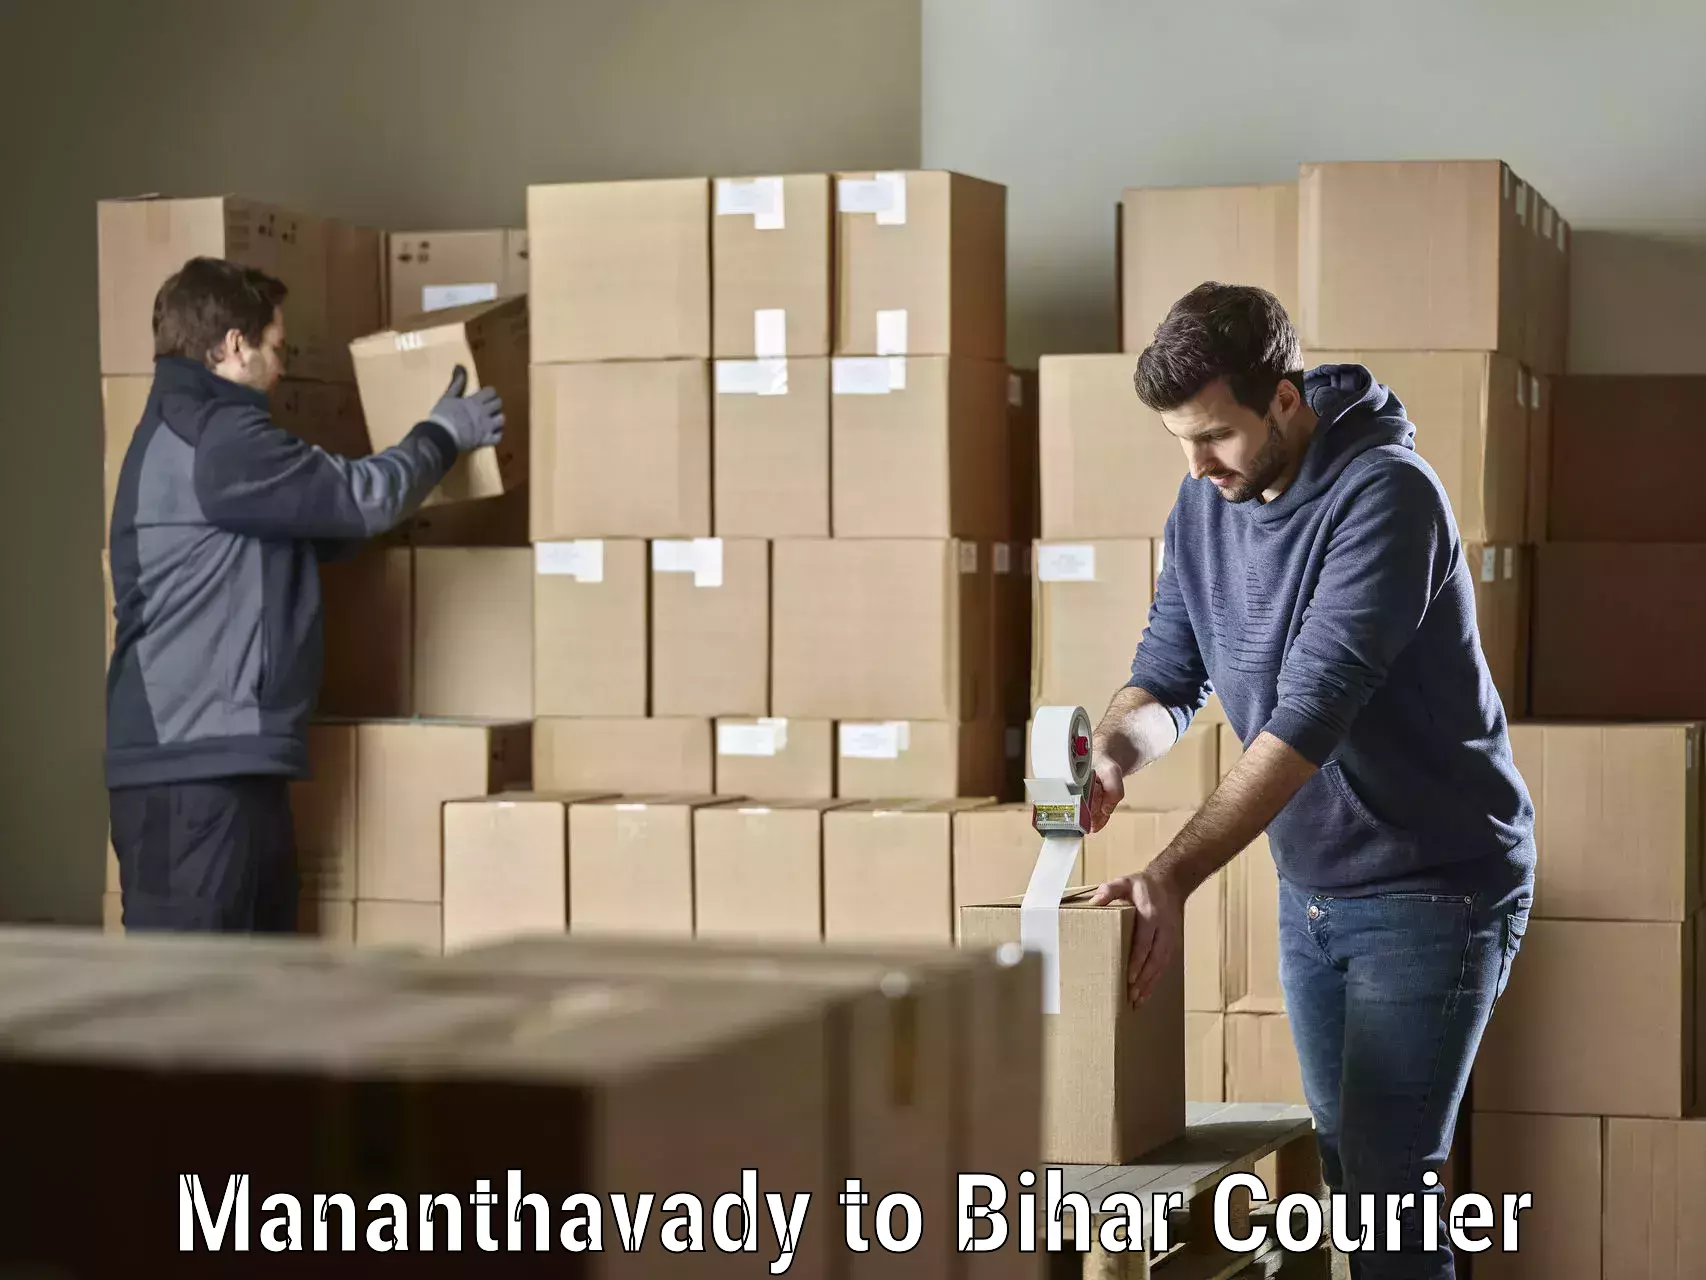 Digital courier platforms Mananthavady to Dighwara